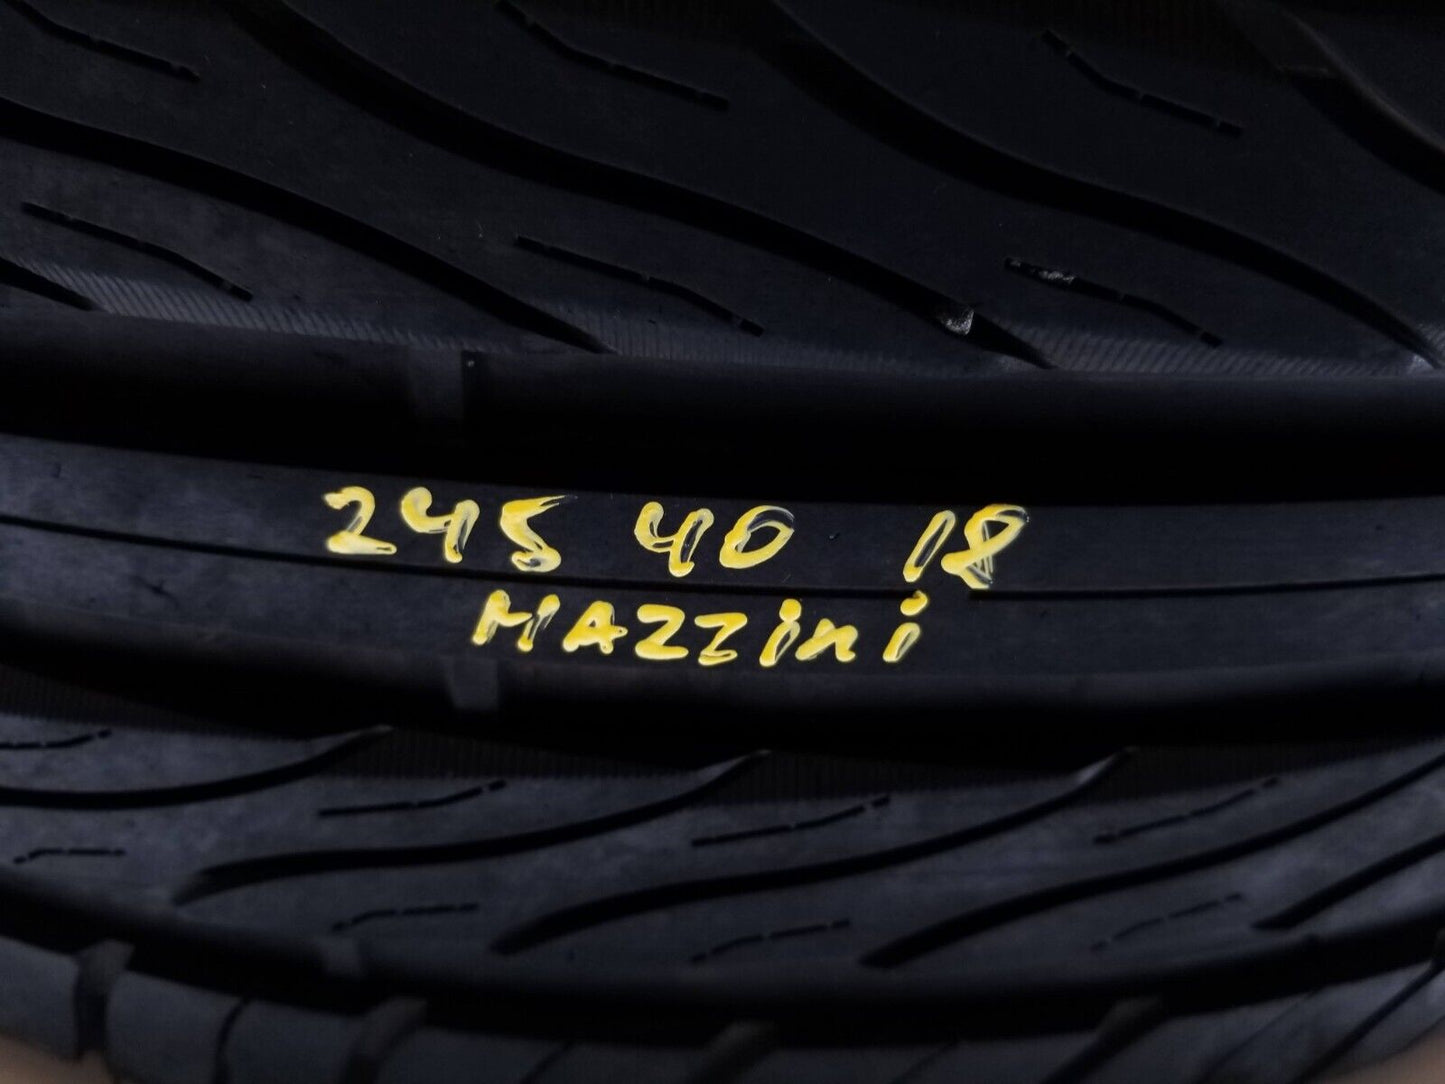 Used Mazzini Eco 607 245/40 Zr18 97y Tire 9/32"